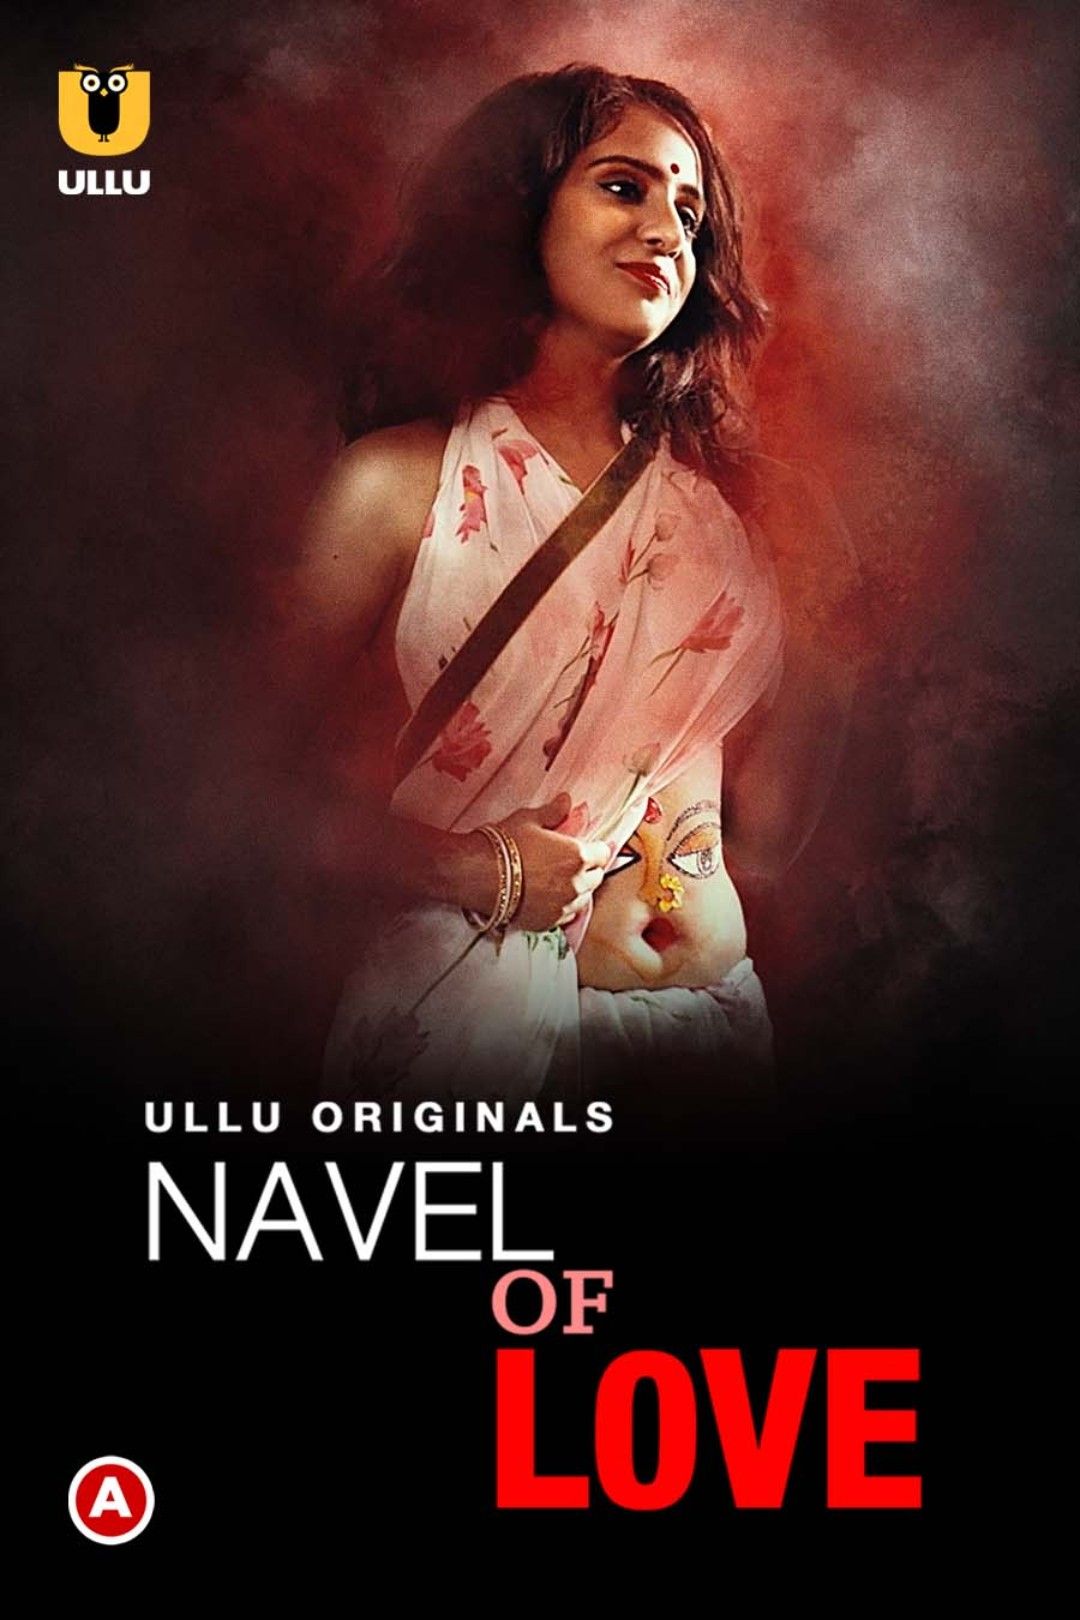 Navel of love (2022) S01 Hindi Ullu Web Series Complete HDRip download full movie